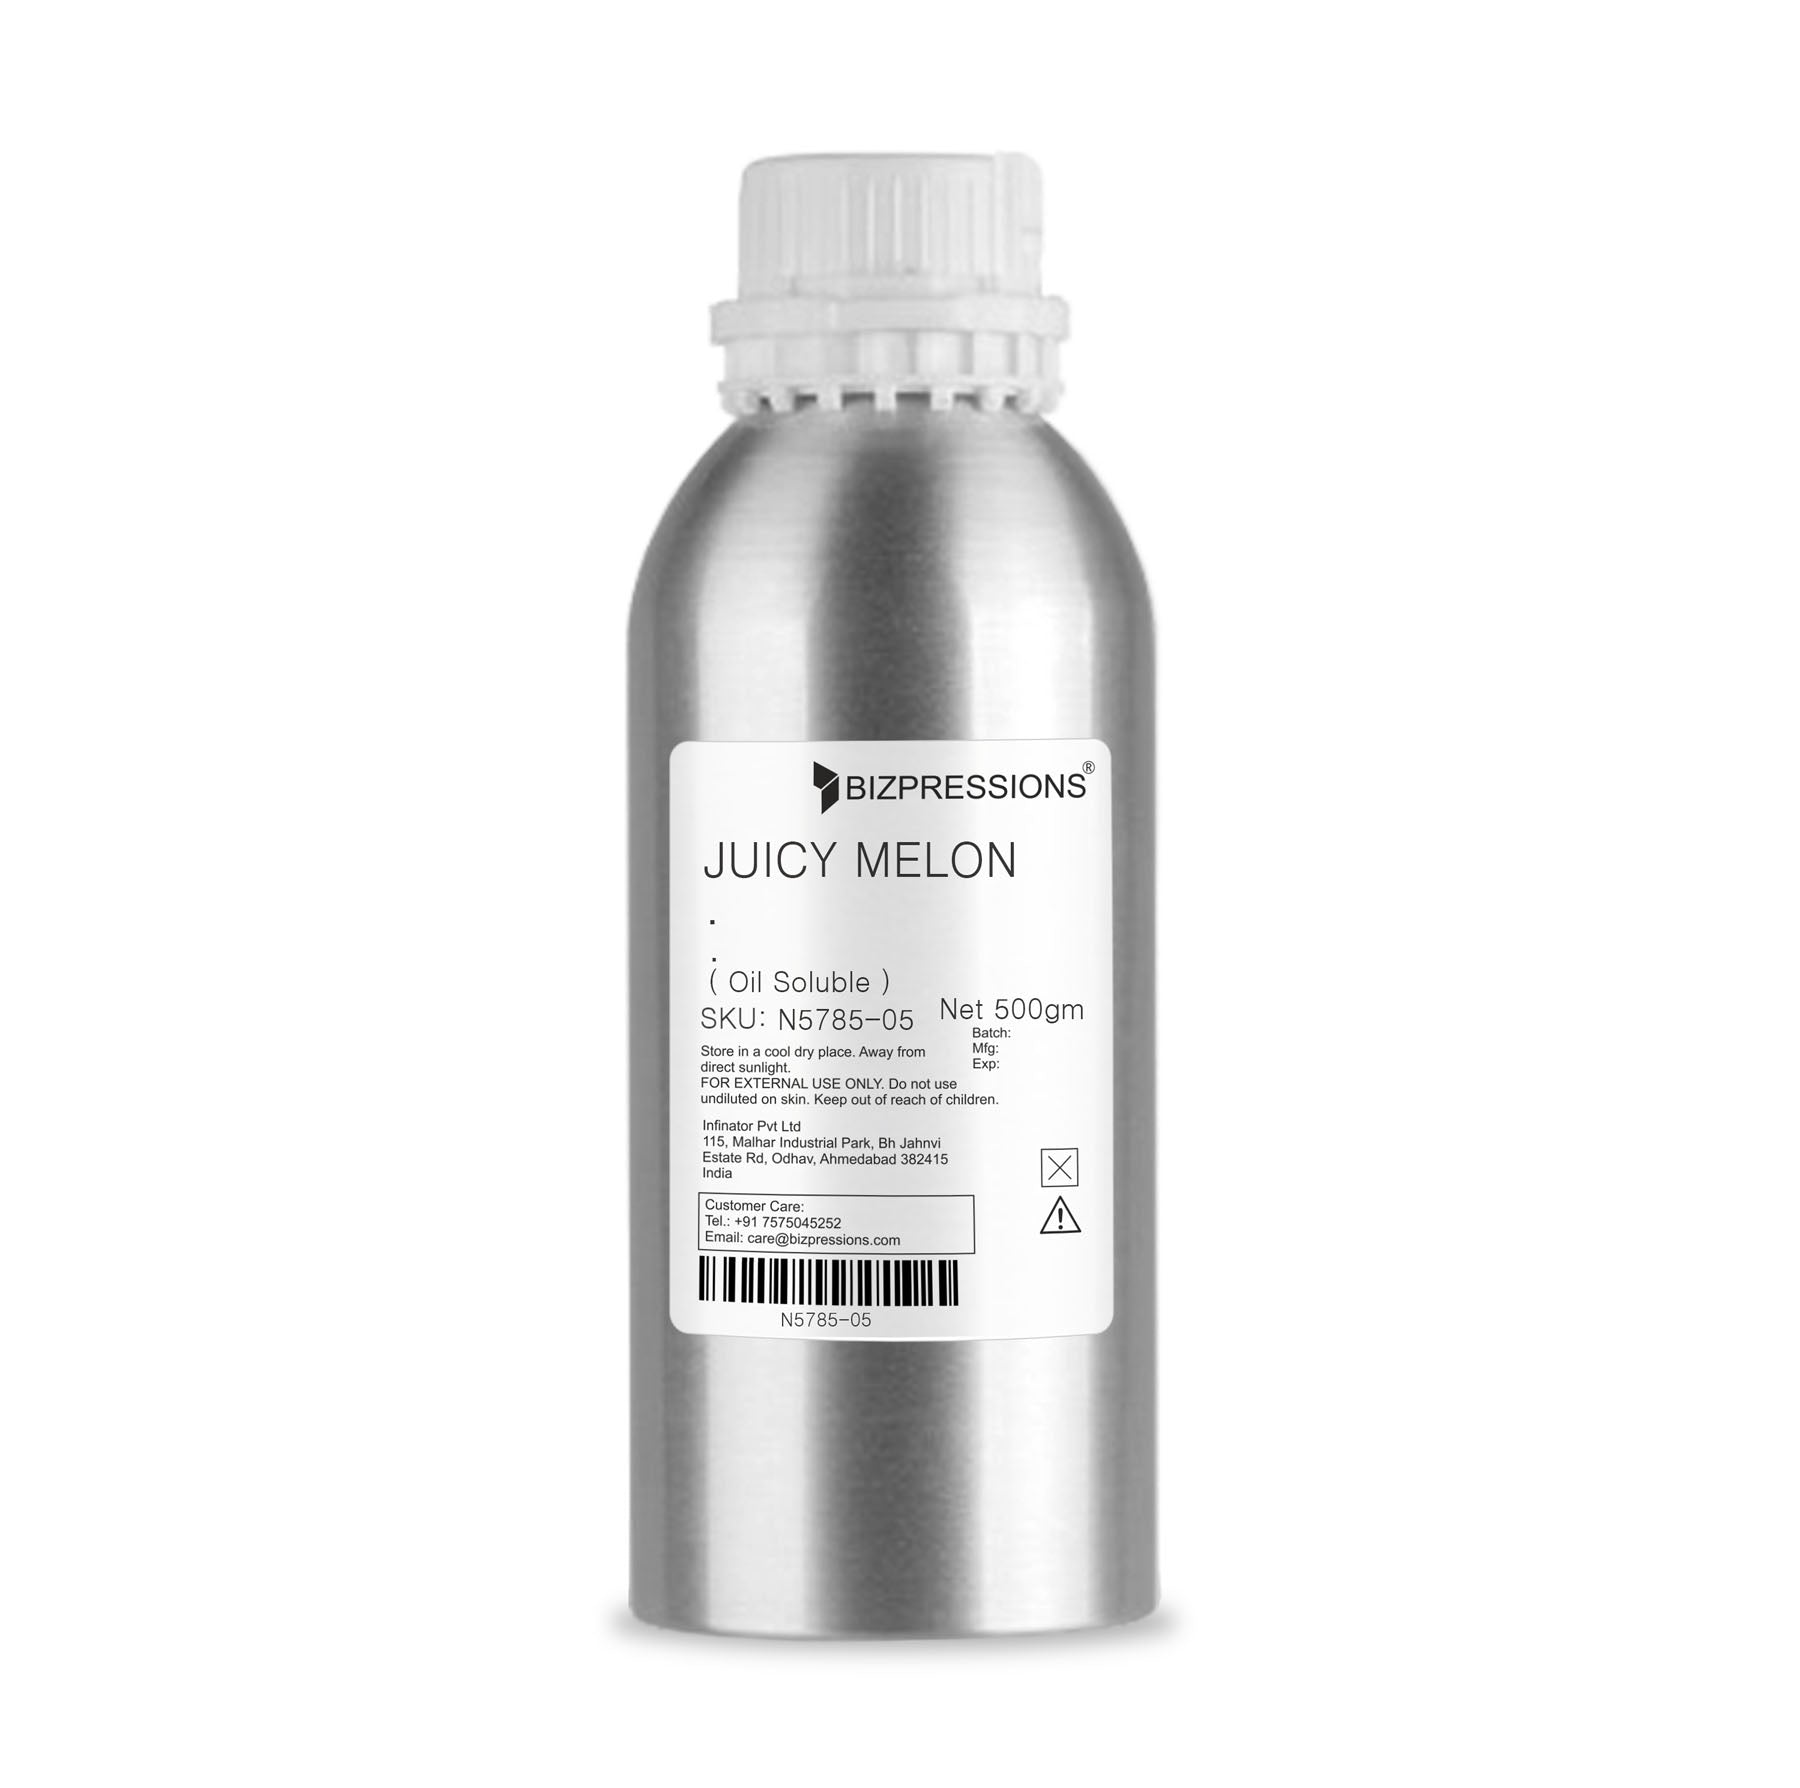 JUICY MELON - Fragrance ( Oil Soluble ) - 500 gm